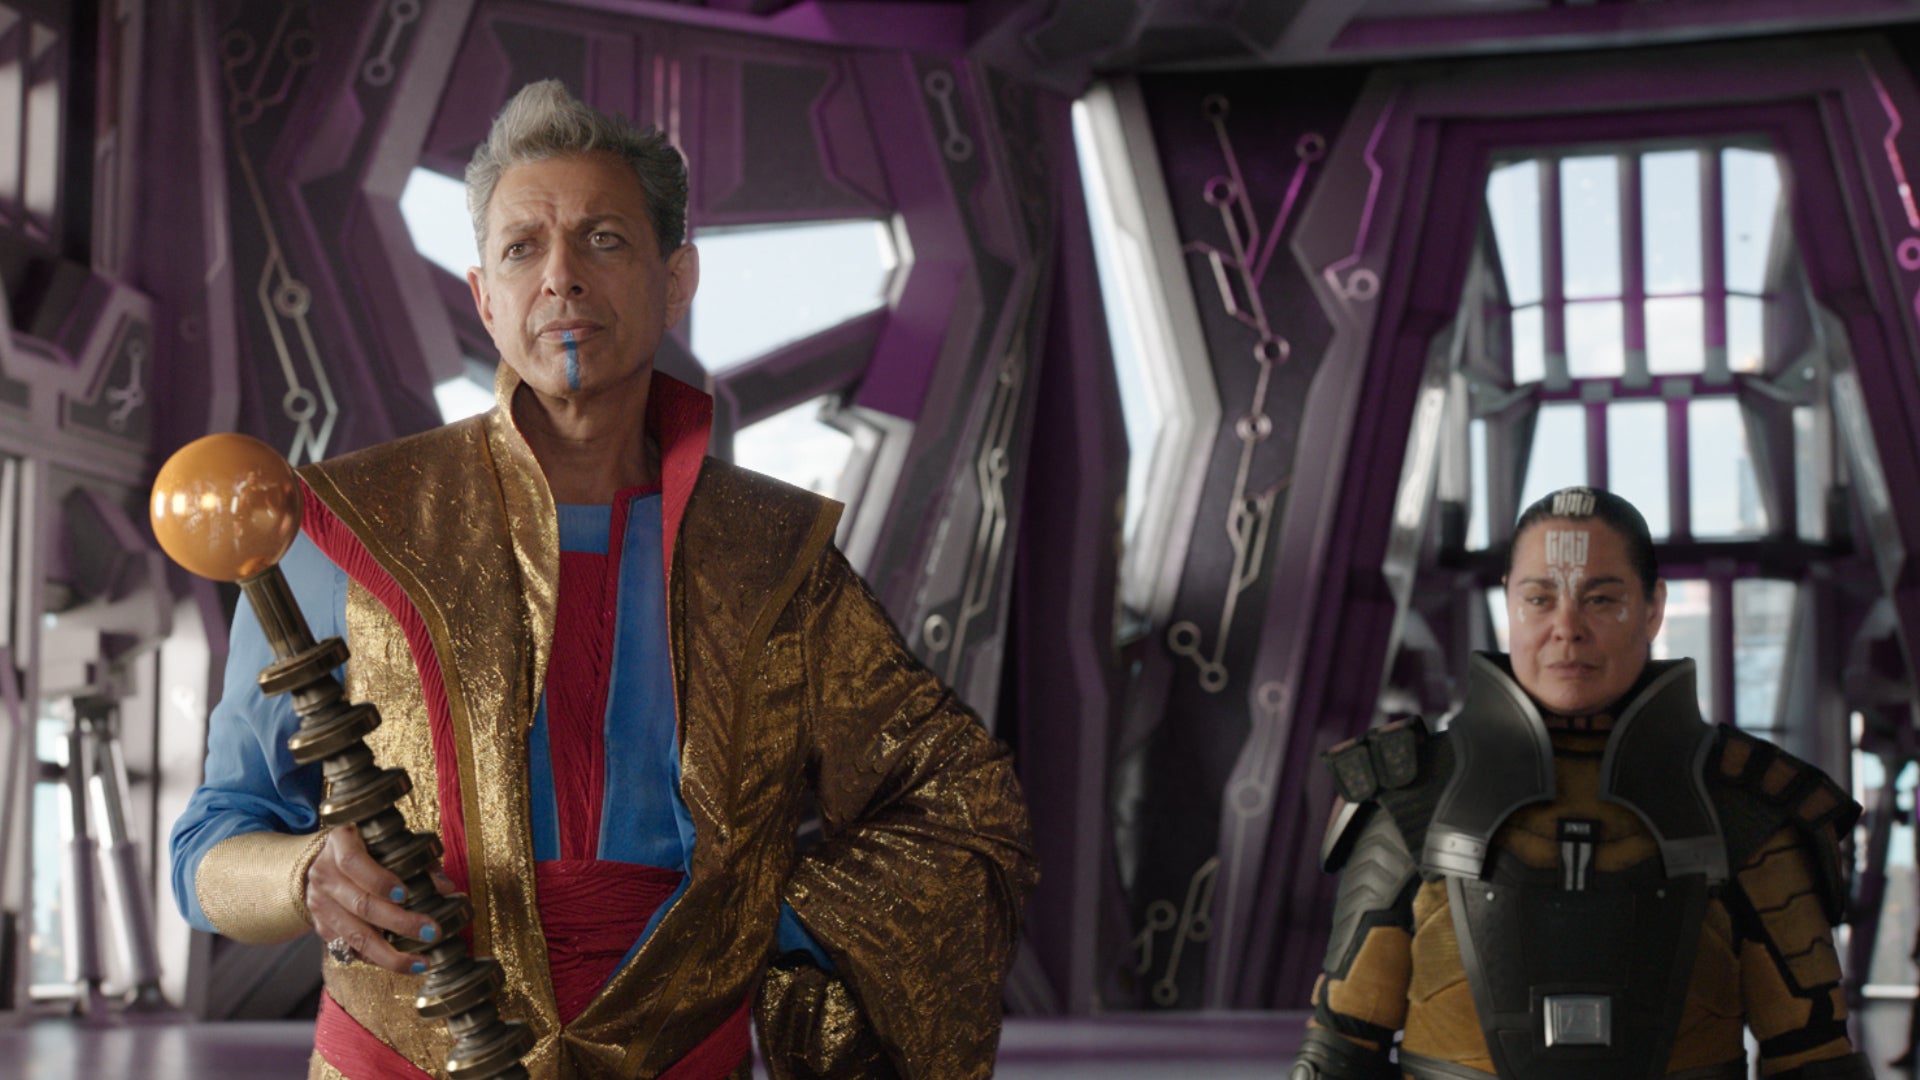 Thor: Ragnarok deleted scenes show off more of Jeff Goldblum's The  Grandmaster